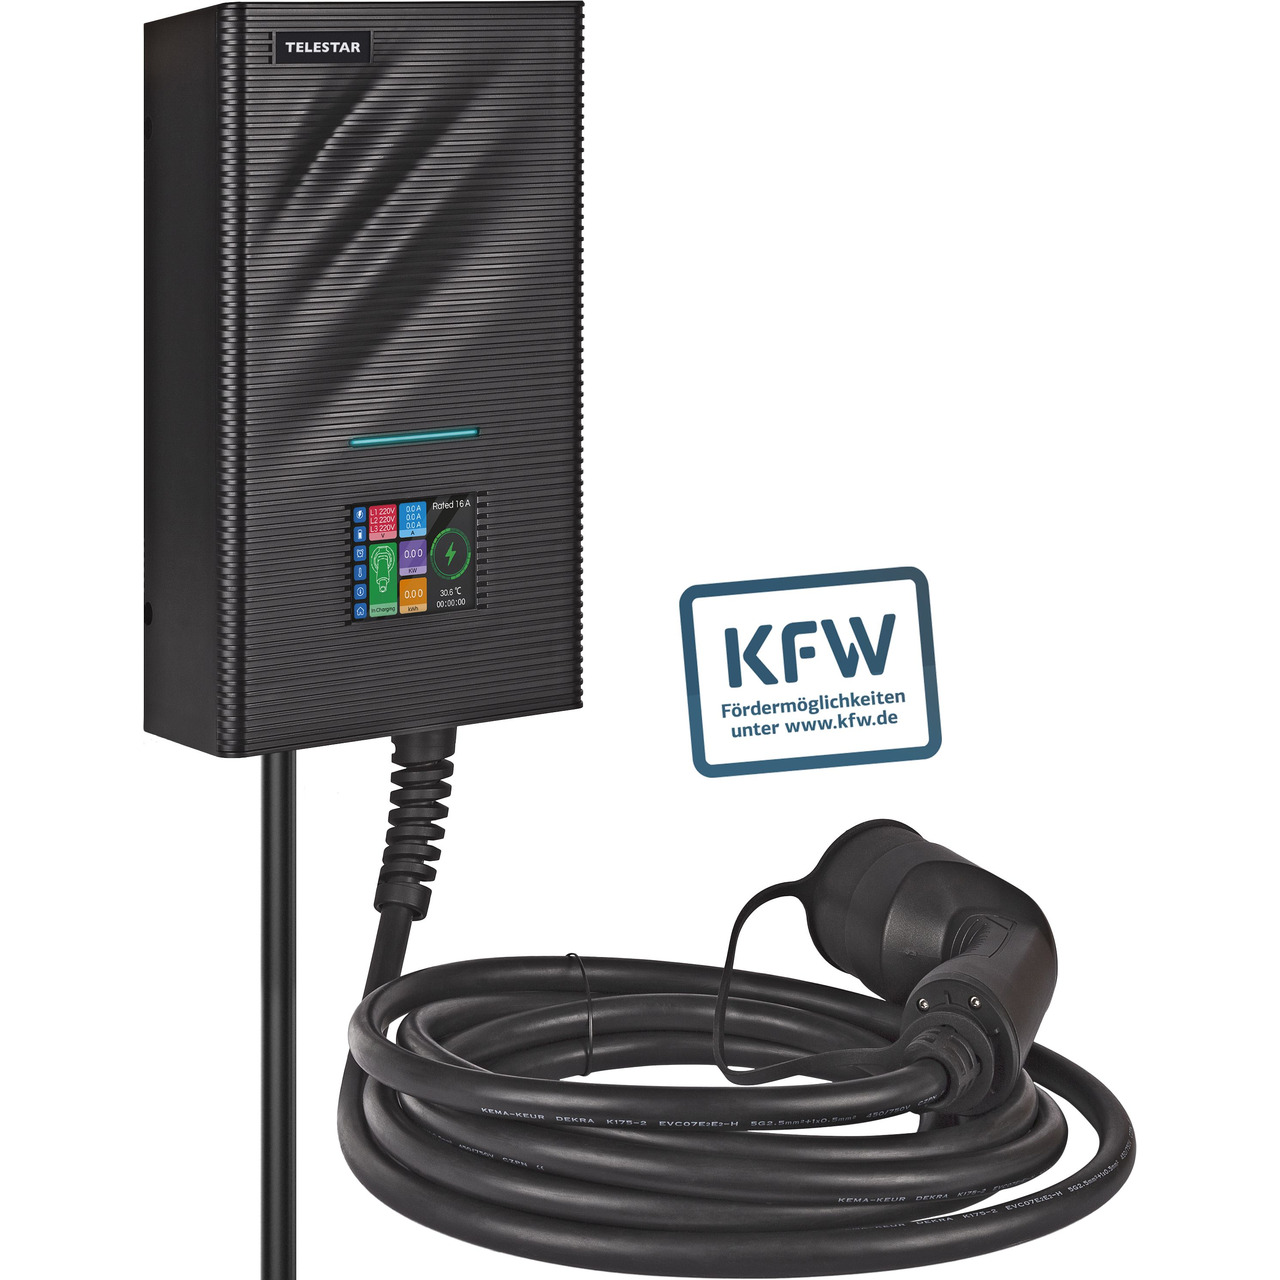 Telestar förderfähige Wallbox EC 311 S6- 11 kW-  6 m Ladekabel- App unter Stromversorgung